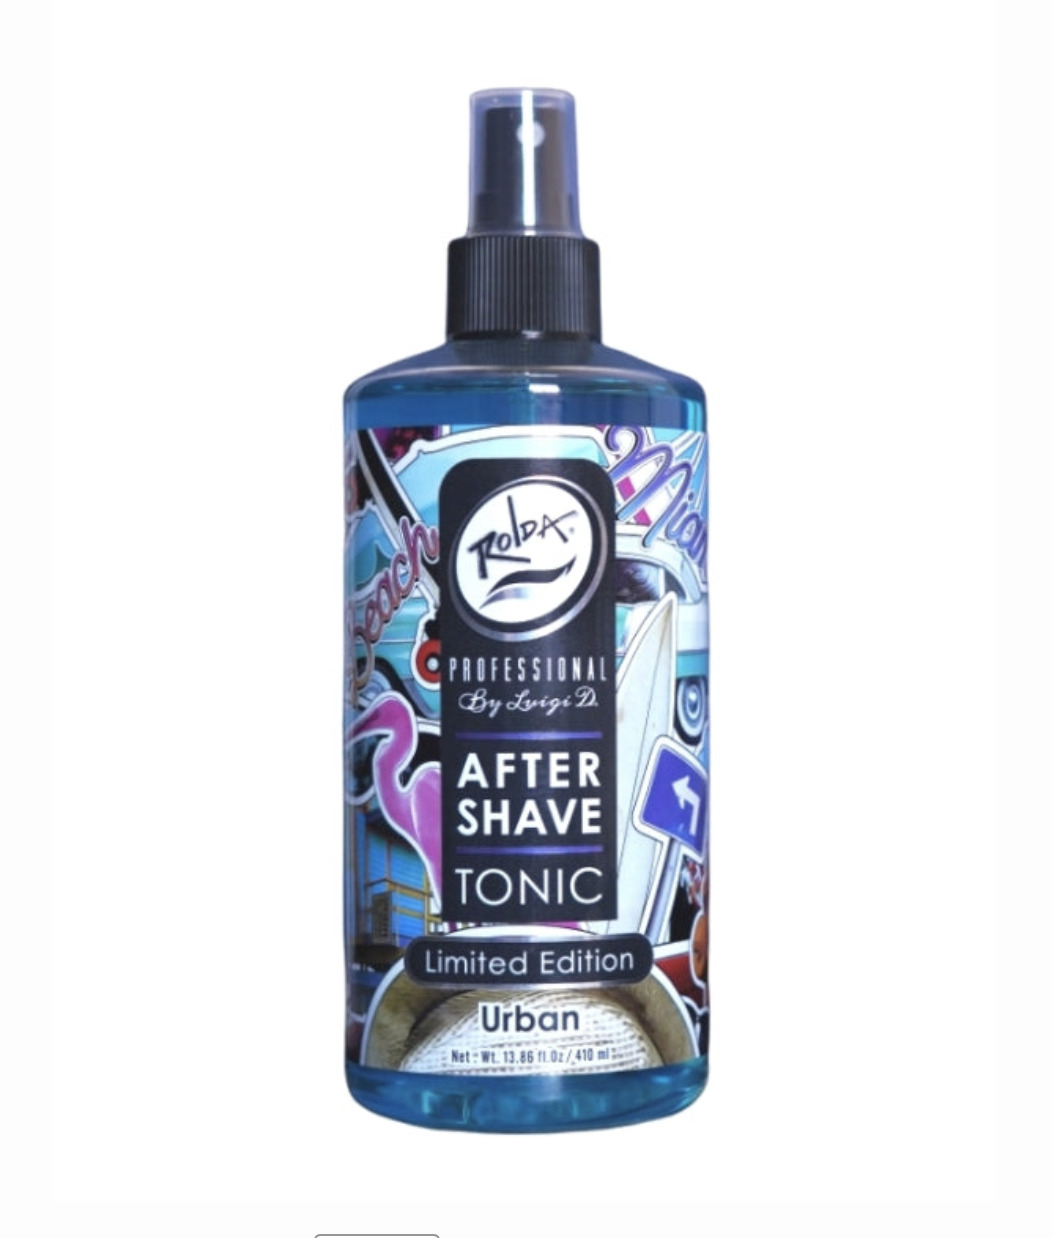 Rolda After Shave Tonic Spray Limited Edition - Urban 13.86oz/410ml